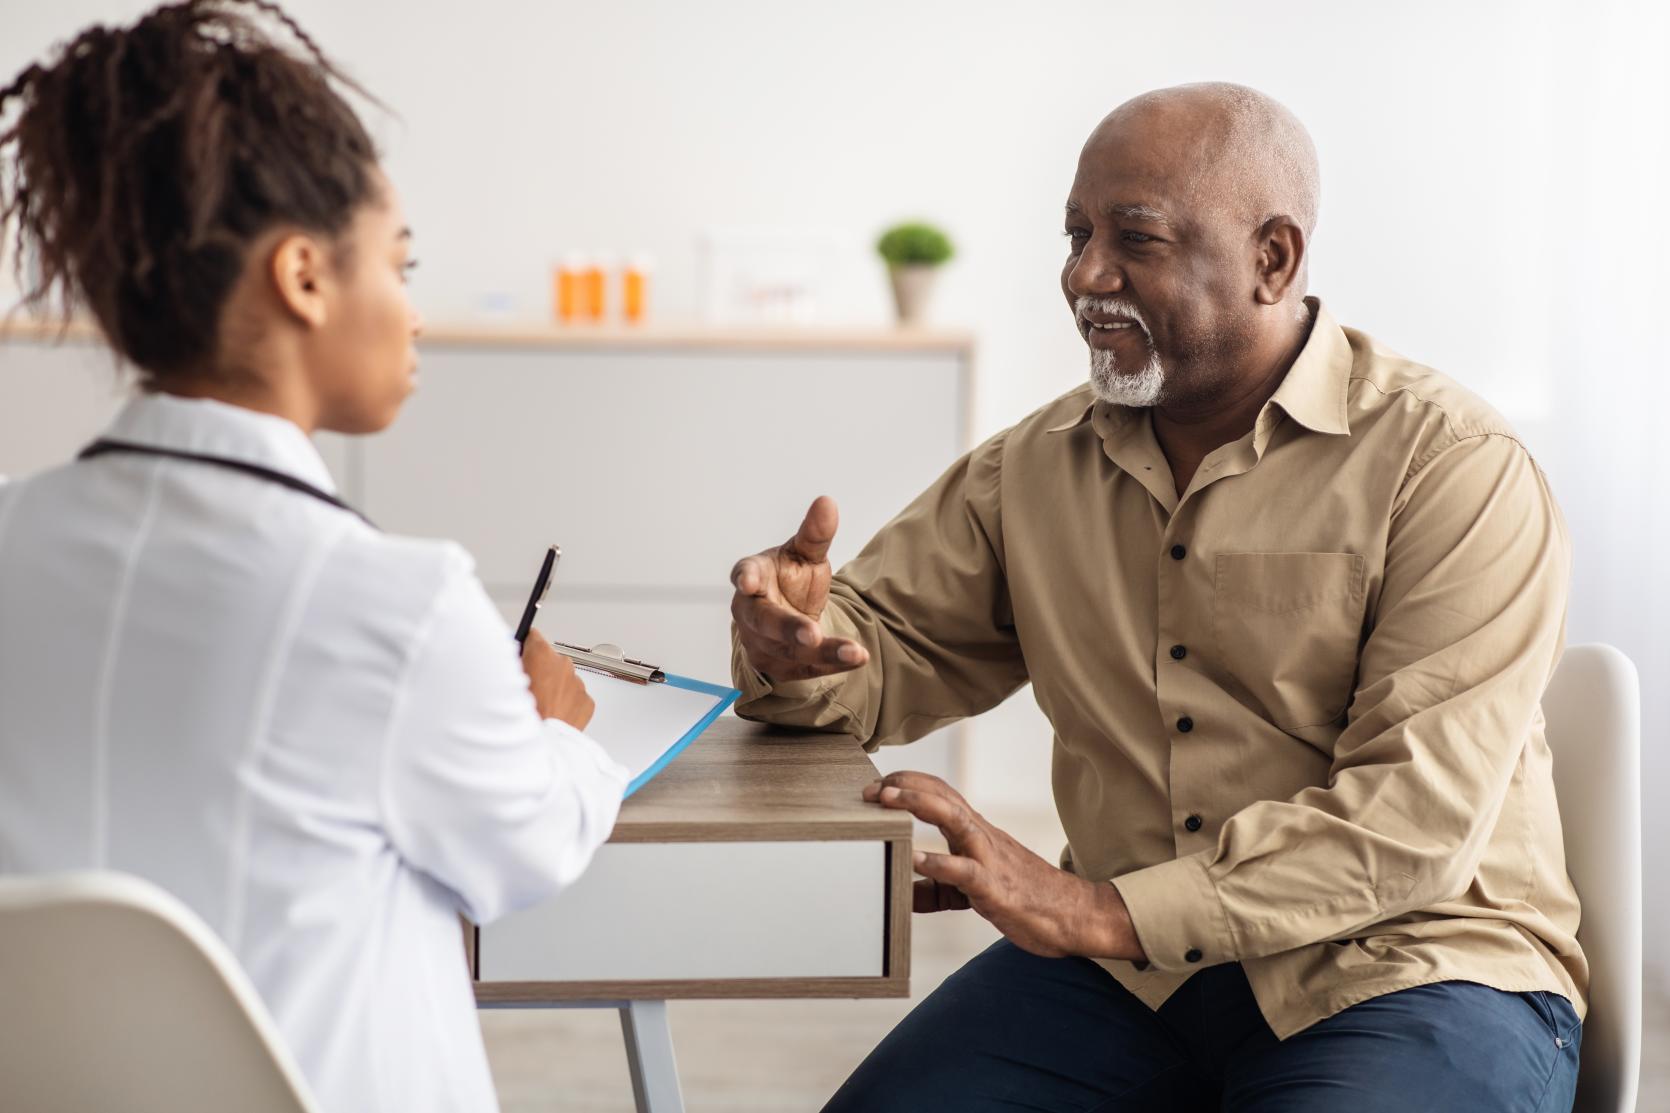 Black female doctor advising an older black male patient.